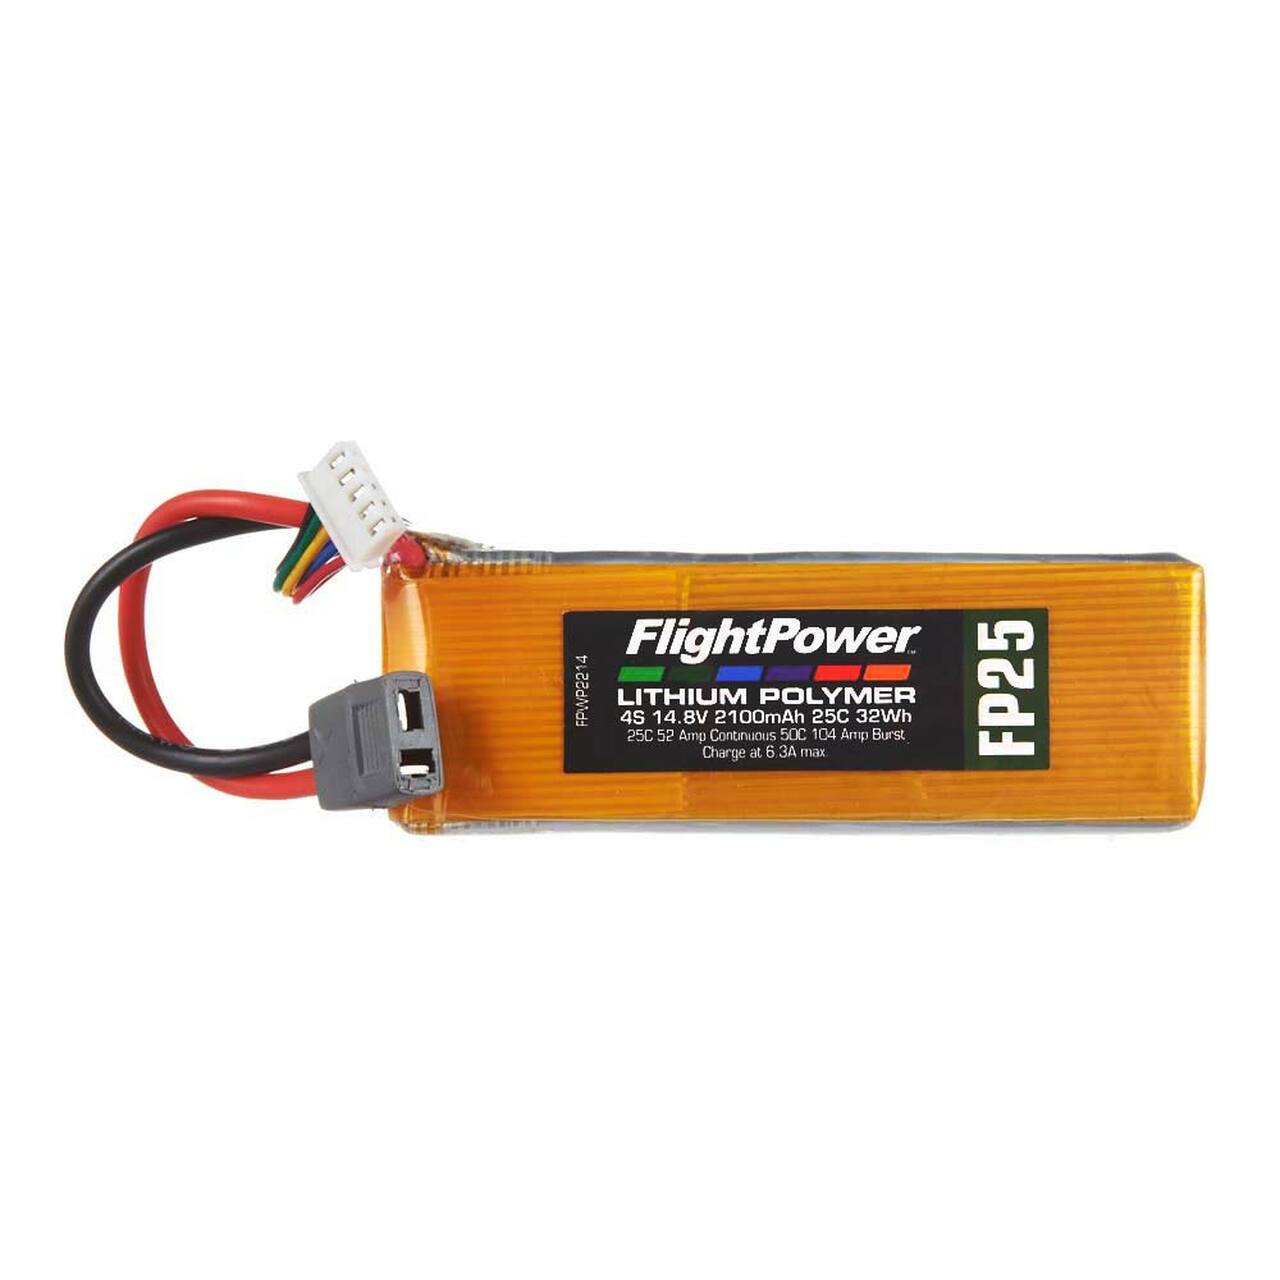 FlightPower FPWP2215 FP25 4S 14.8V 2100mAh 25C LiPo Battery with a Star Plug